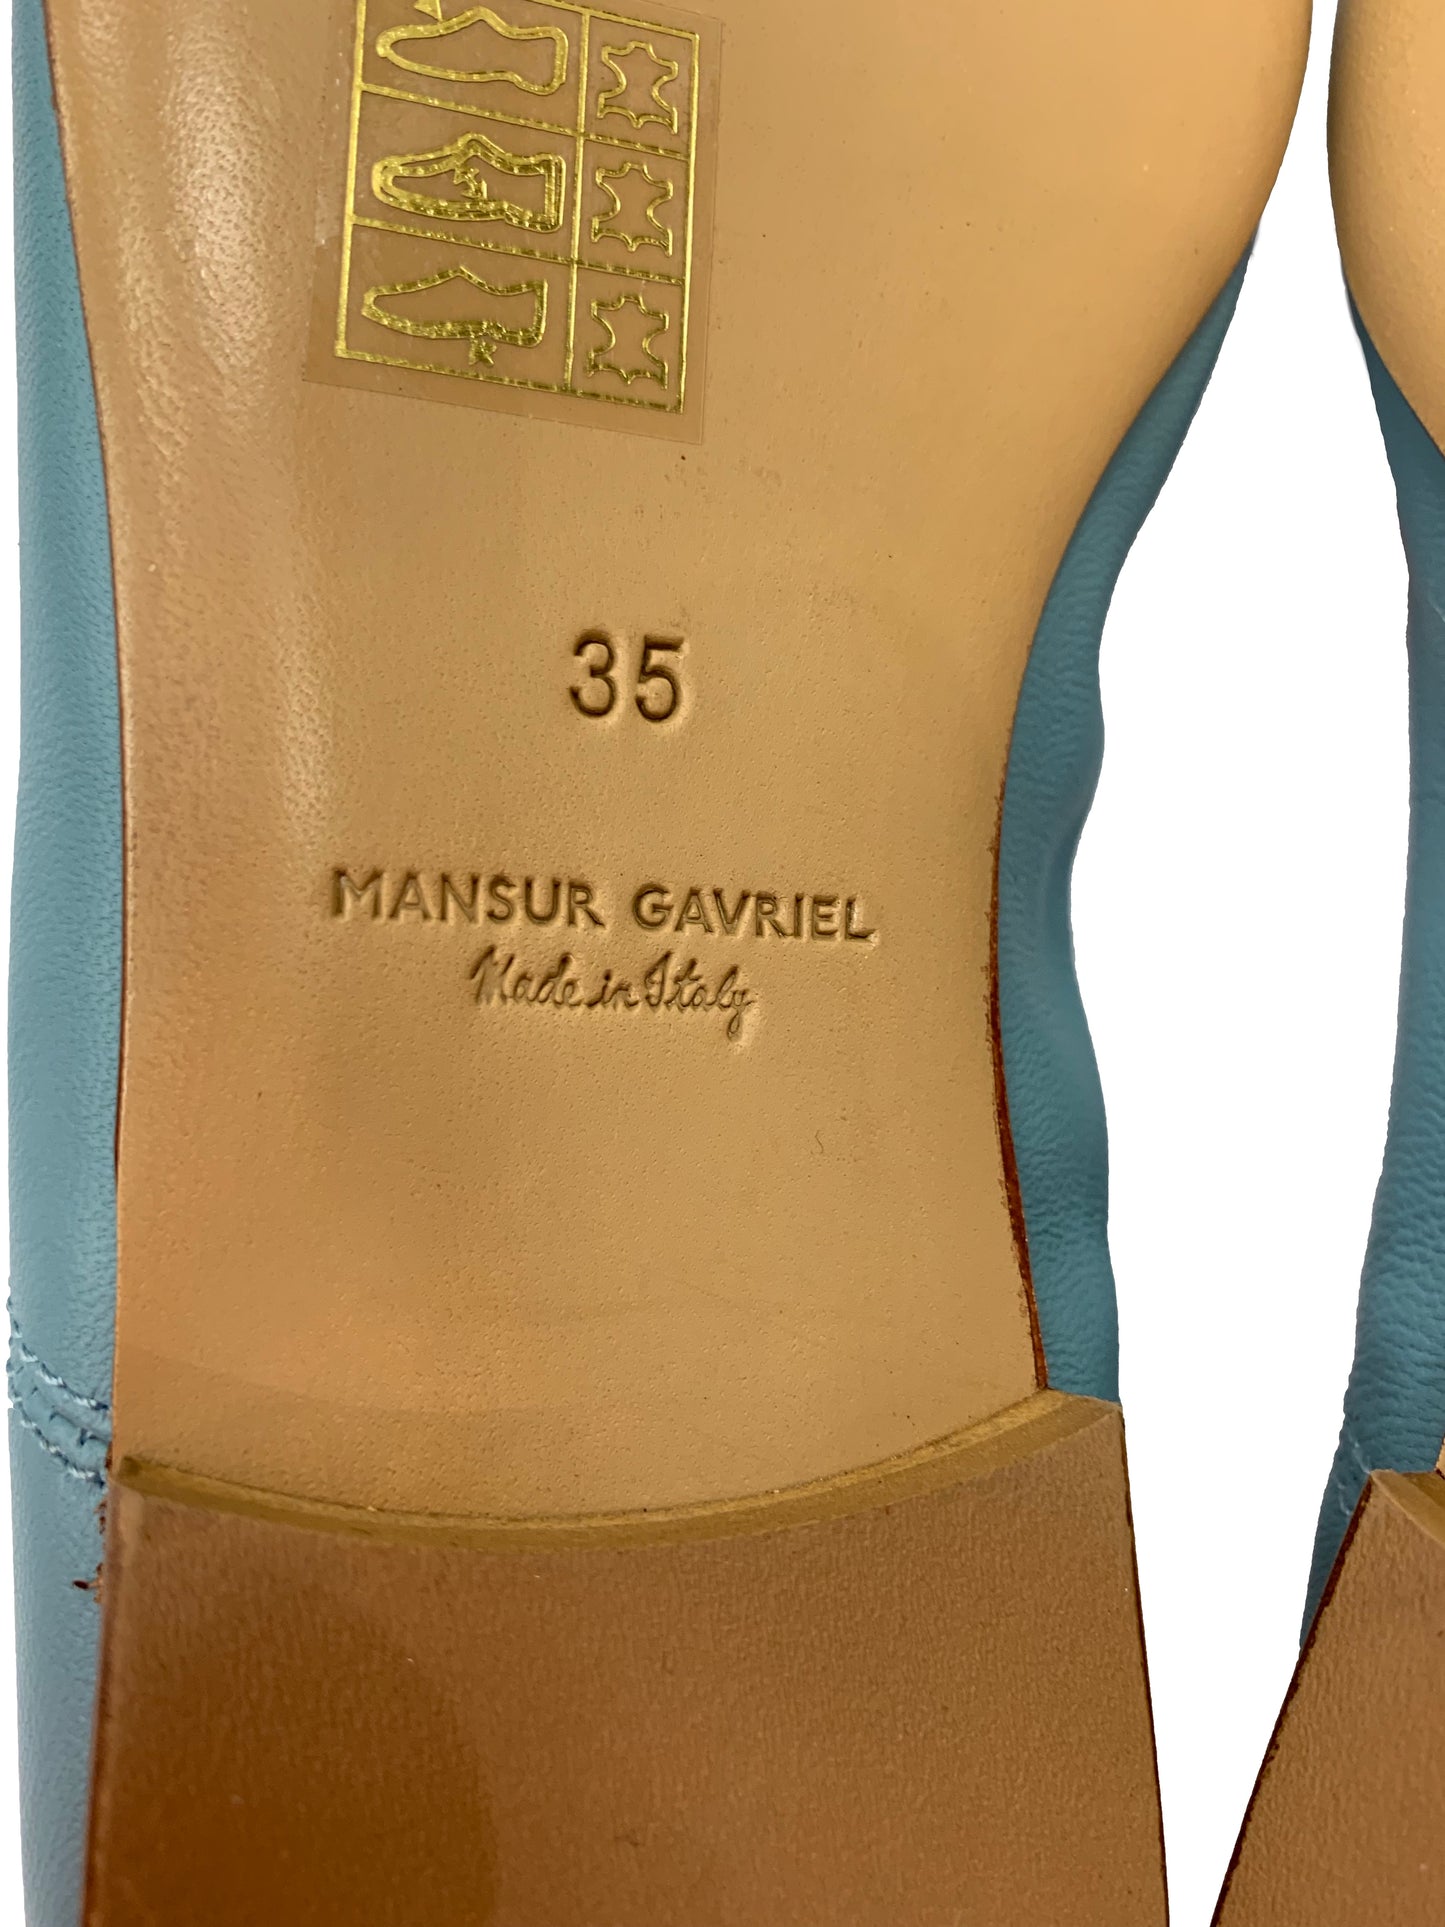 MANSUR GAVRIEL Flats Light Blue Size 35